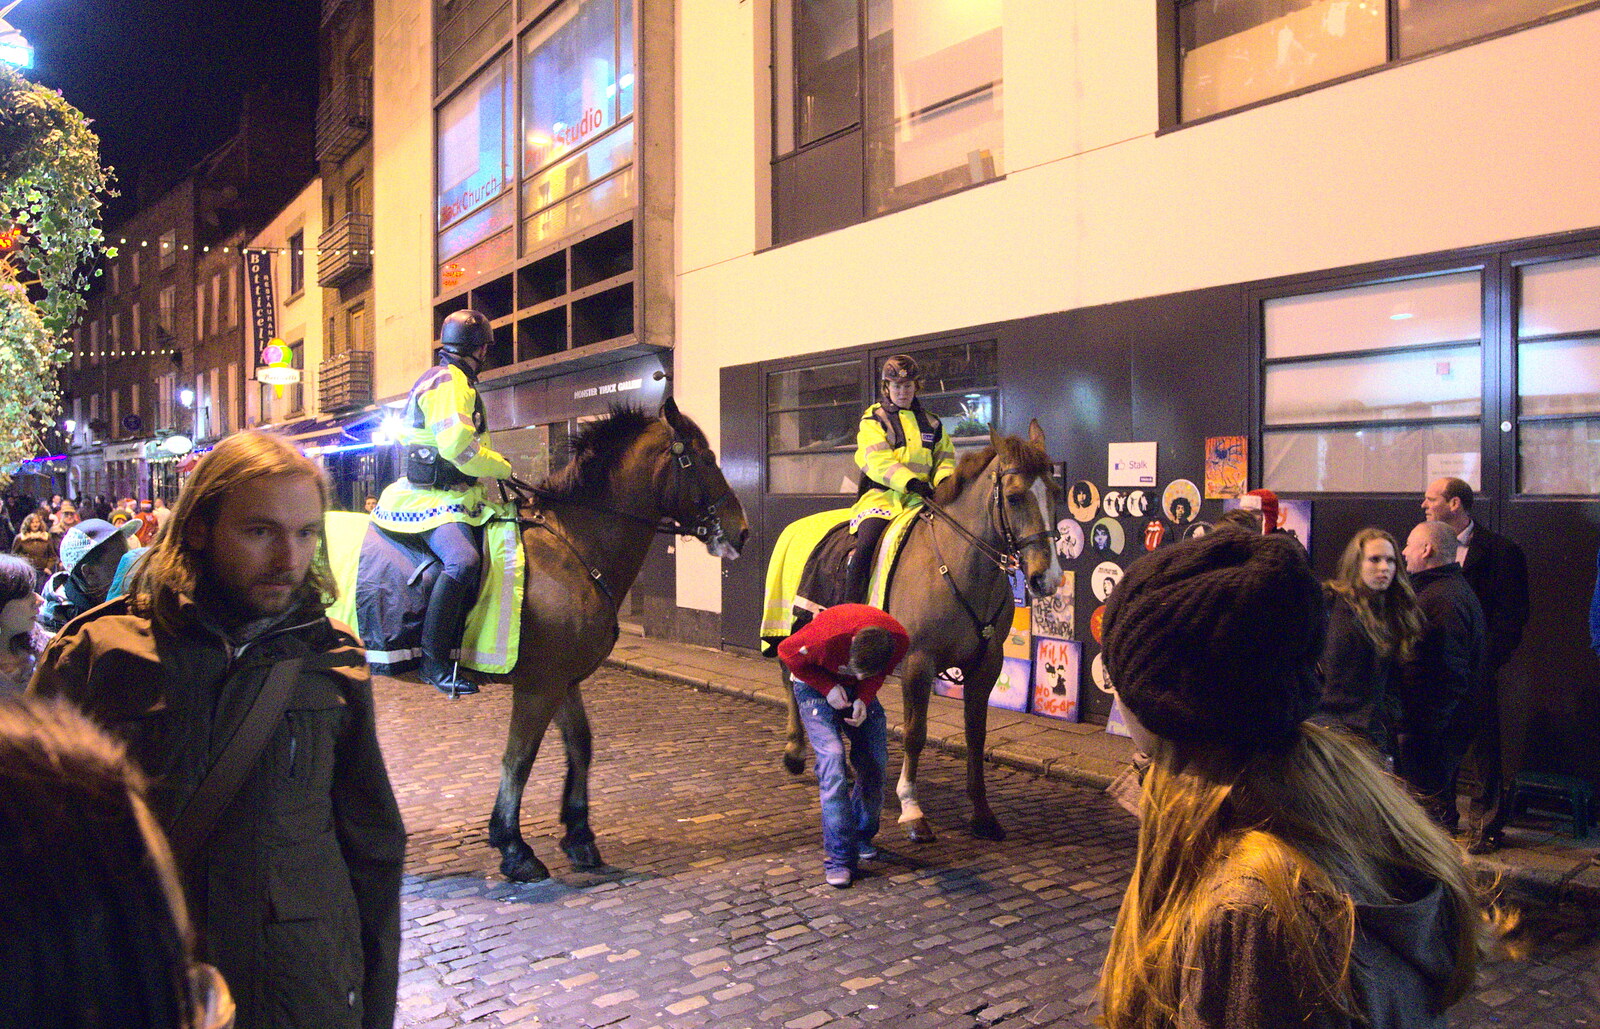 Gardai on horseback 'kettle' a drunk in Temple Bar from A Night on the Lash, Dublin, Ireland - 14th December 2012